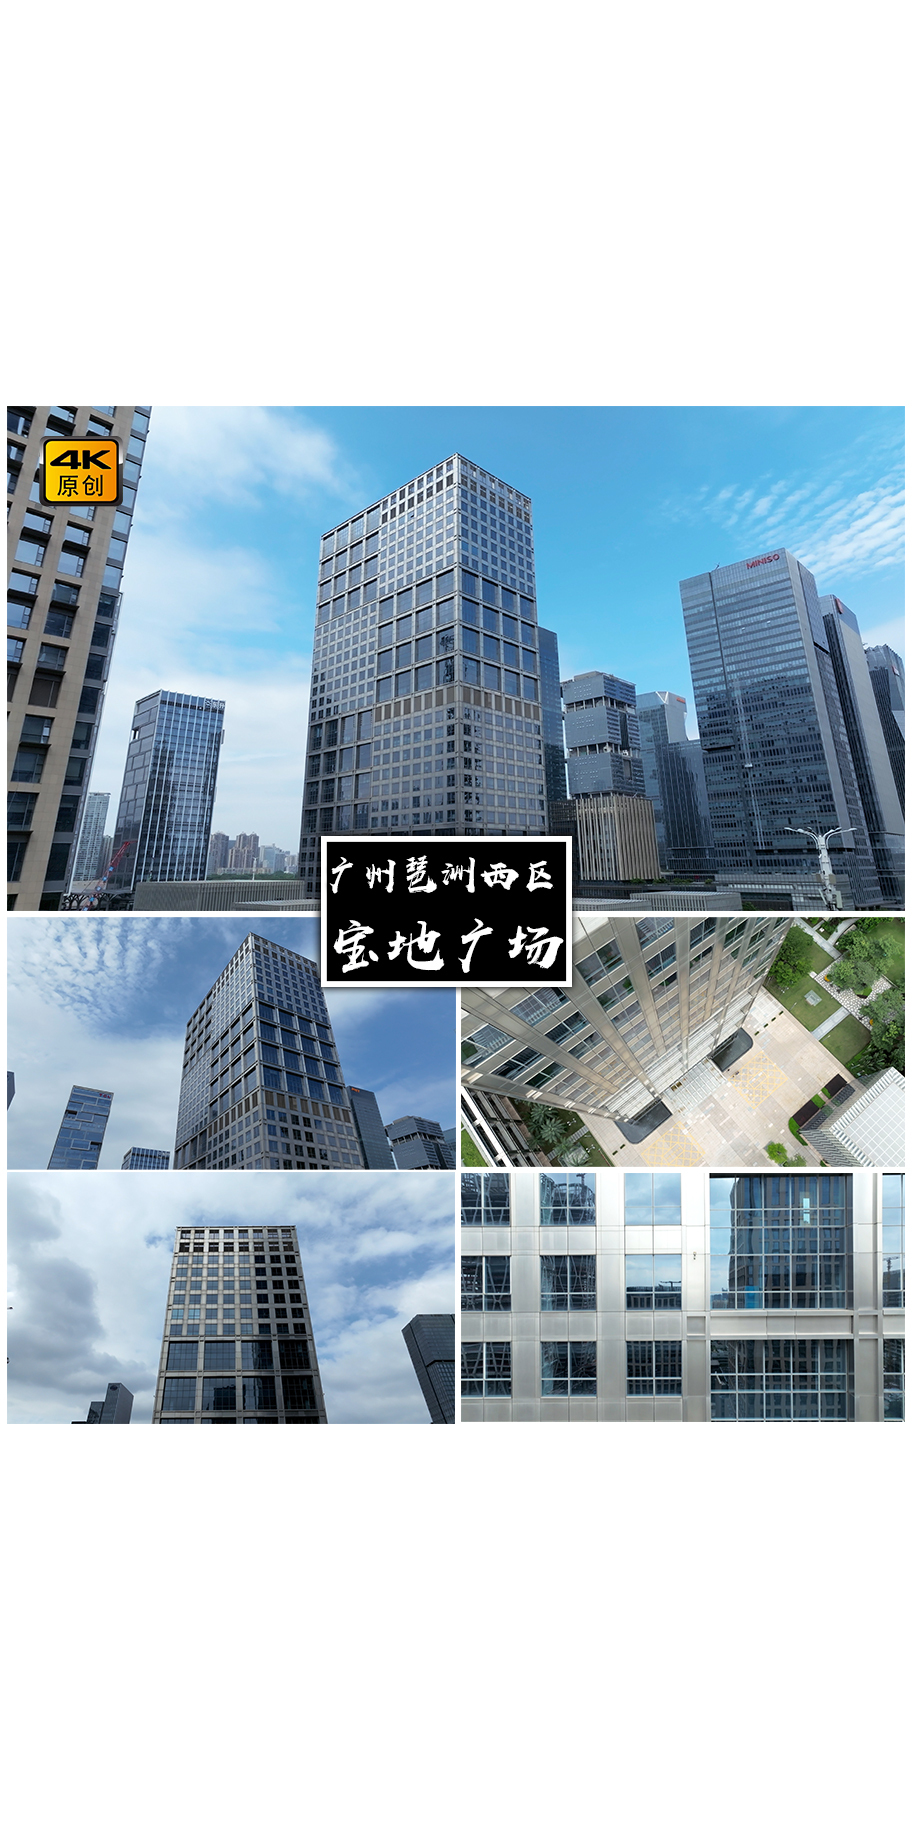 4K高清 | 广州宝地广场航拍合集